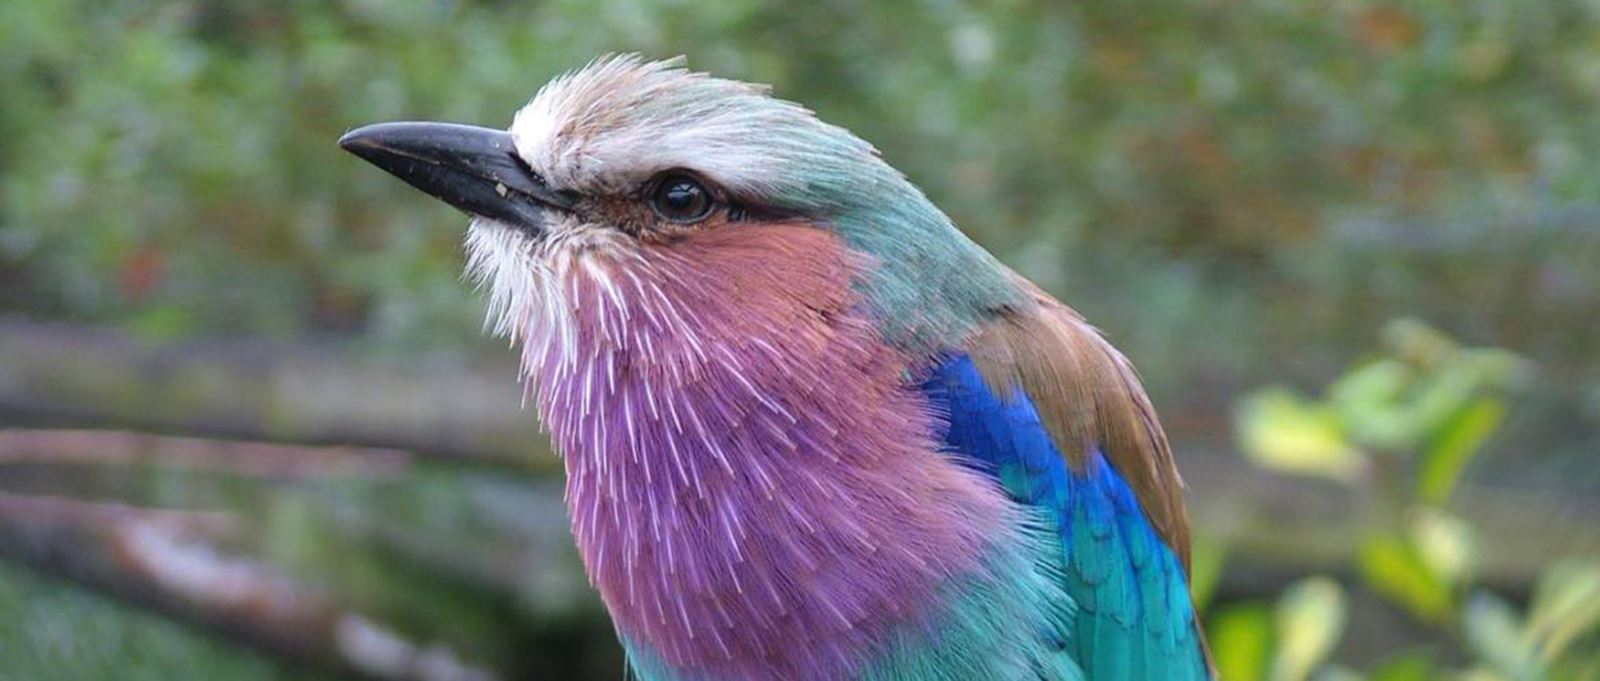 Colourful bird at Birdworld, Hampshire